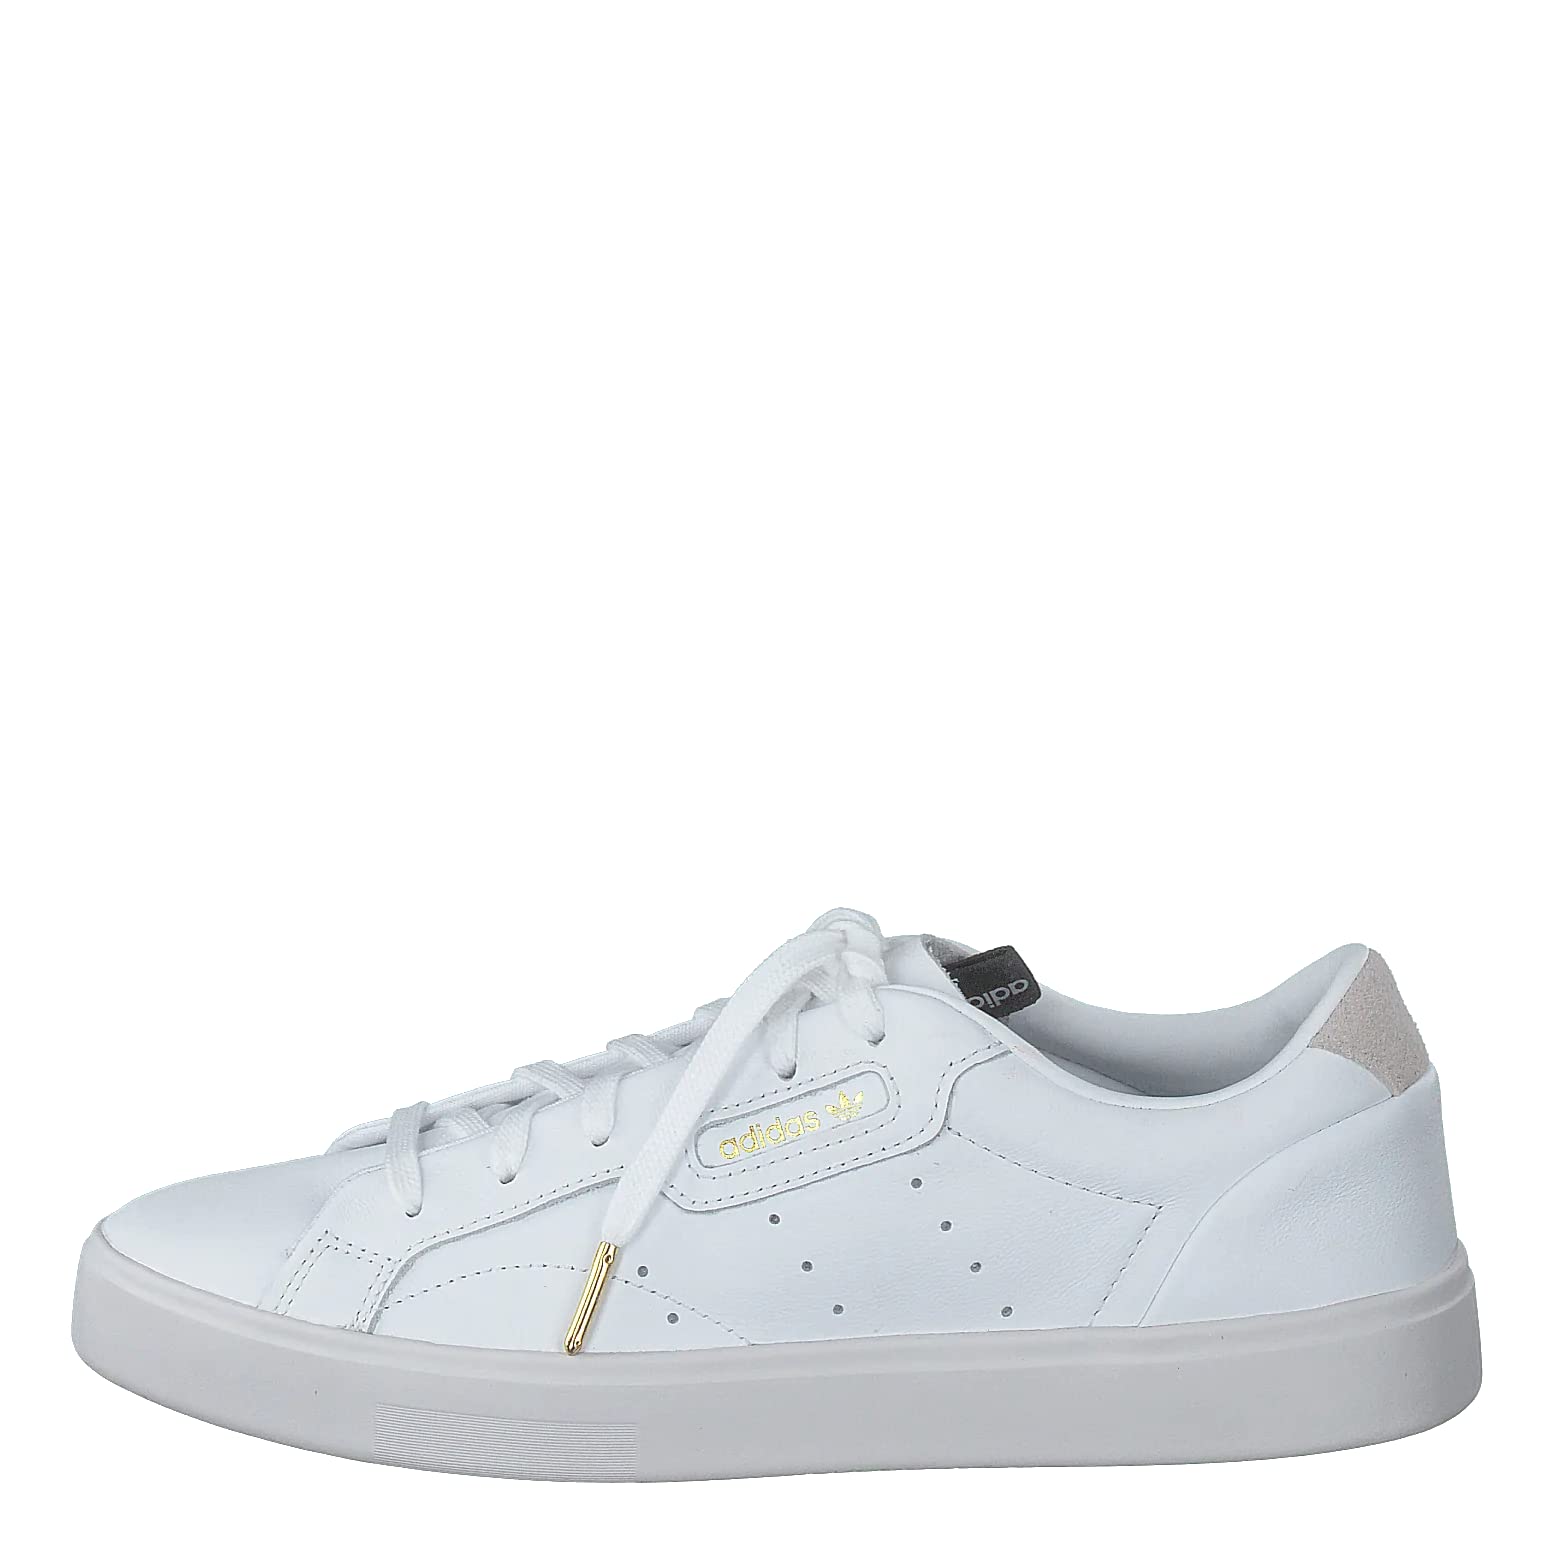 adidas Damen Sleek Sneaker, Weiß (Footwear White/Footwear White/Crystal White 0), 37 1/3 EU